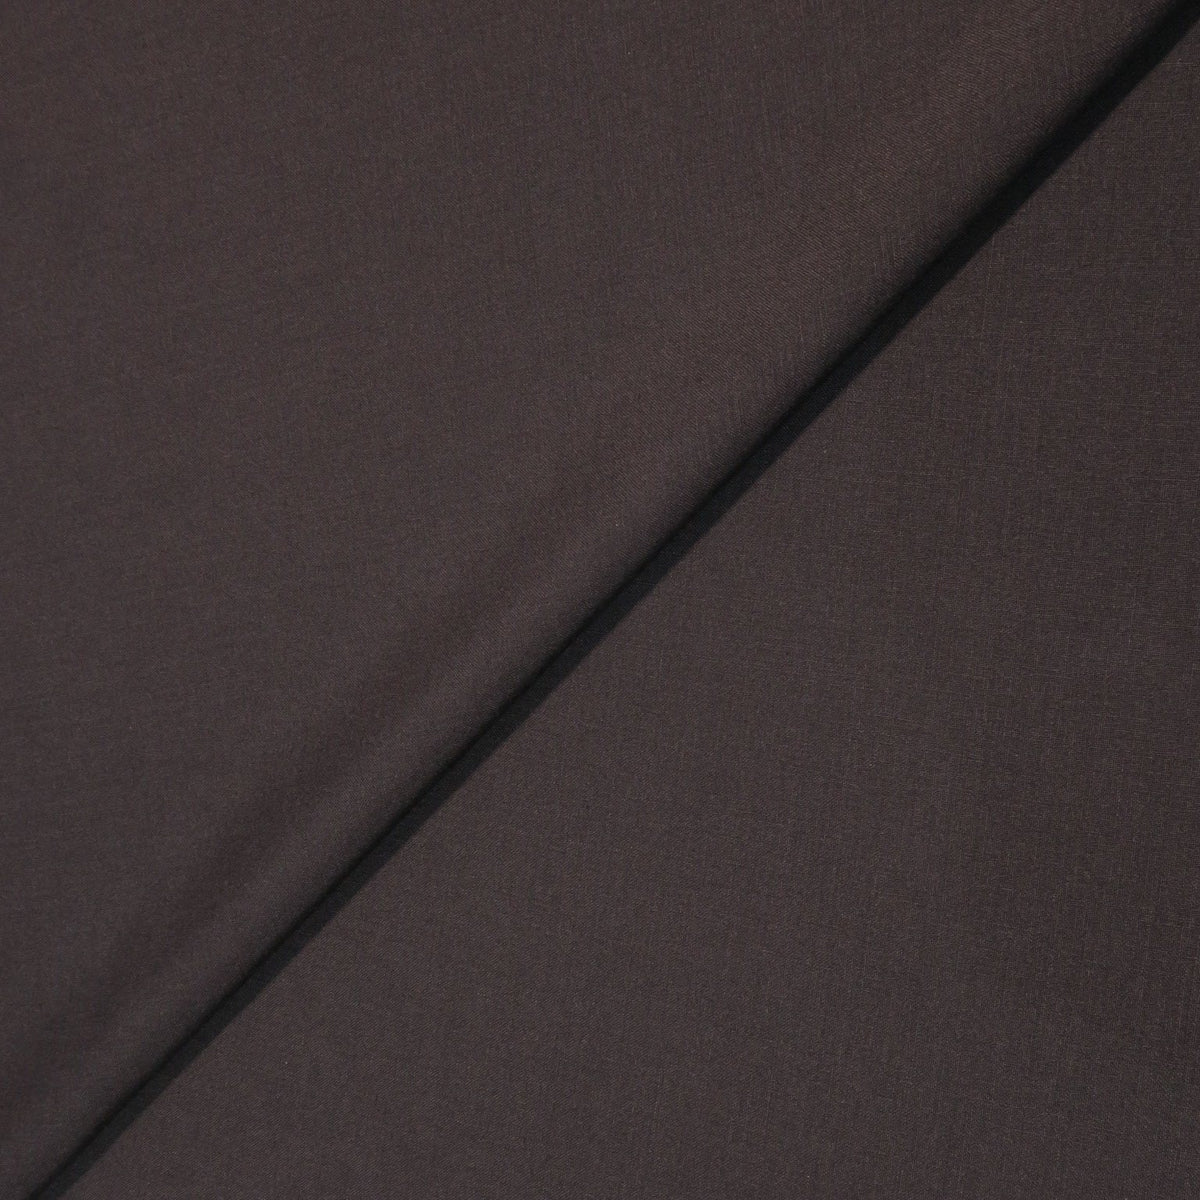 Eobriley Blakeanimal Kingdomcrocodileblackcotton Fabric by the Yard or  Select Length C693R-BLACK 